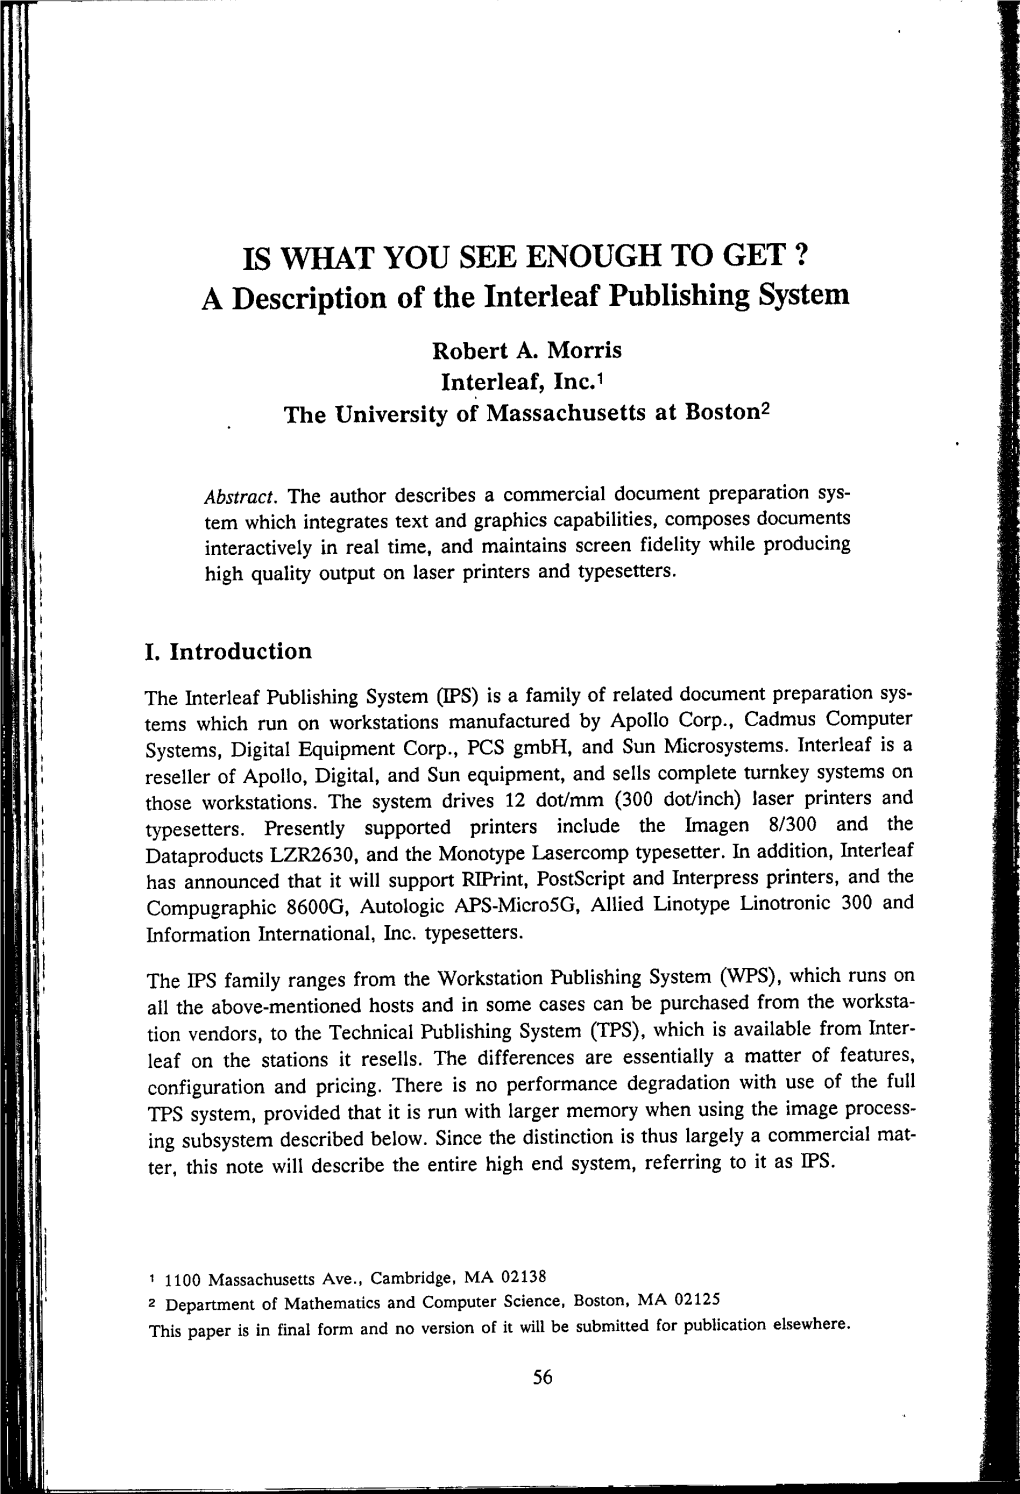 A Description of the Interleaf Publishing System